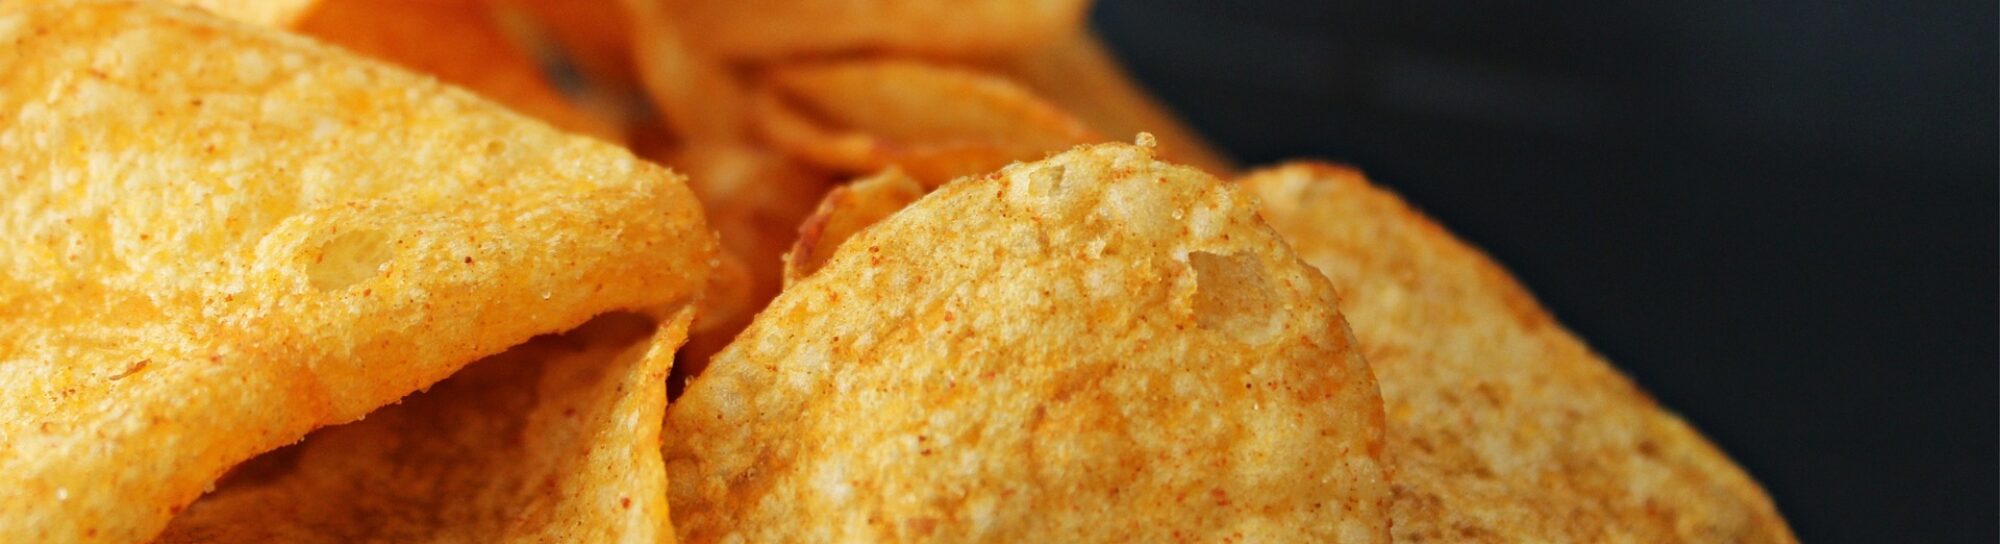 Importe retten Kartoffel-Chips